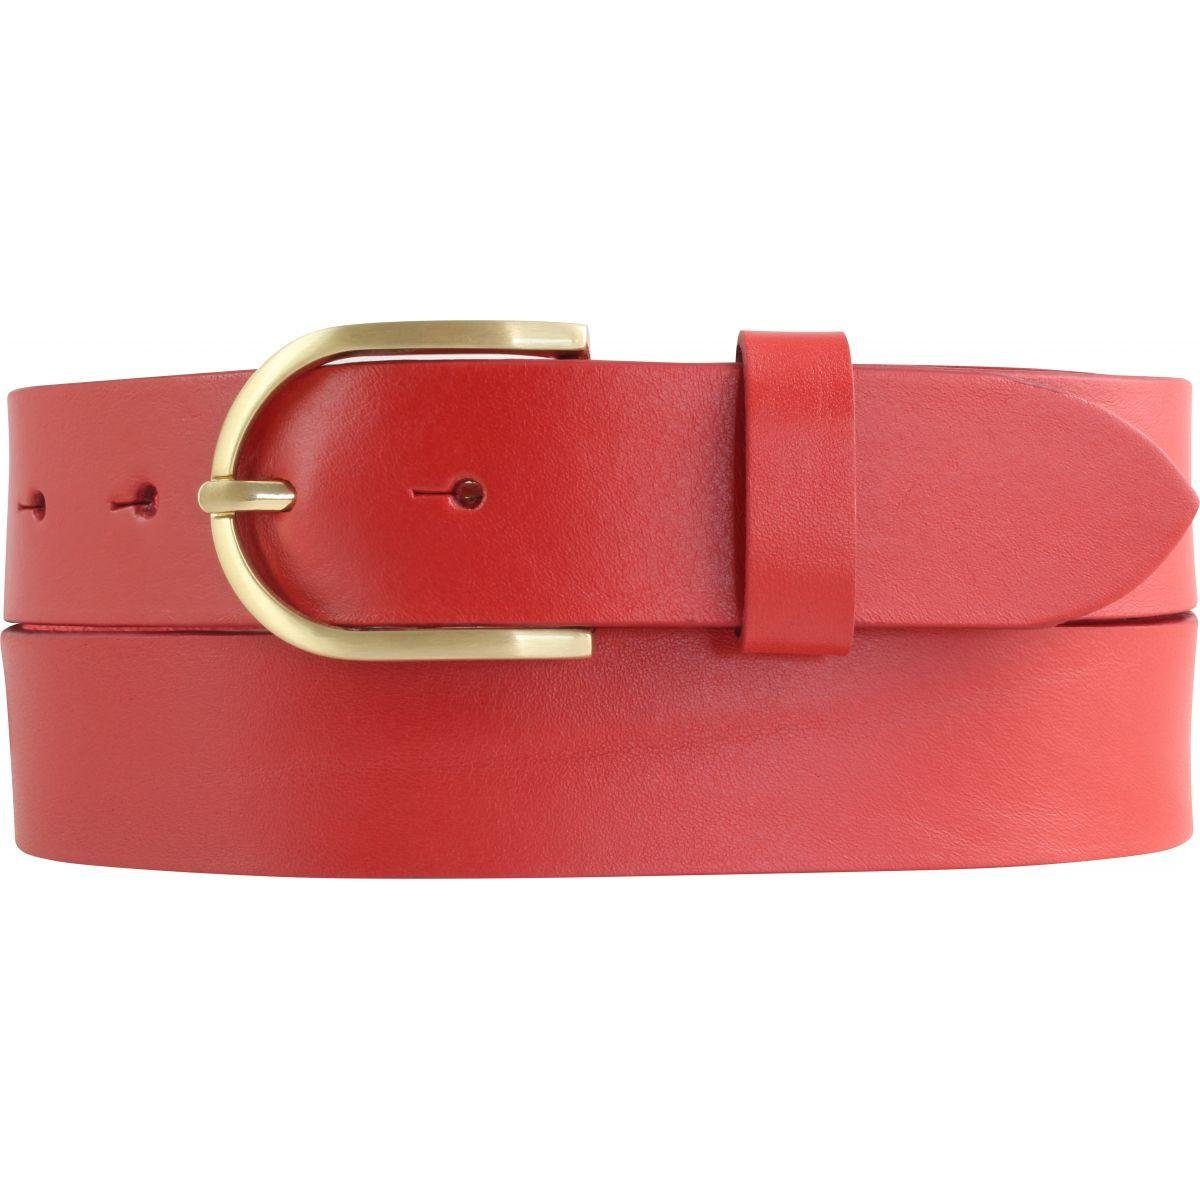 BELTINGER Ledergürtel Damen-Gürtel aus Vollrindleder 3,5 cm - Jeans-Gürtel für Damen 35mm - Rot, Gold